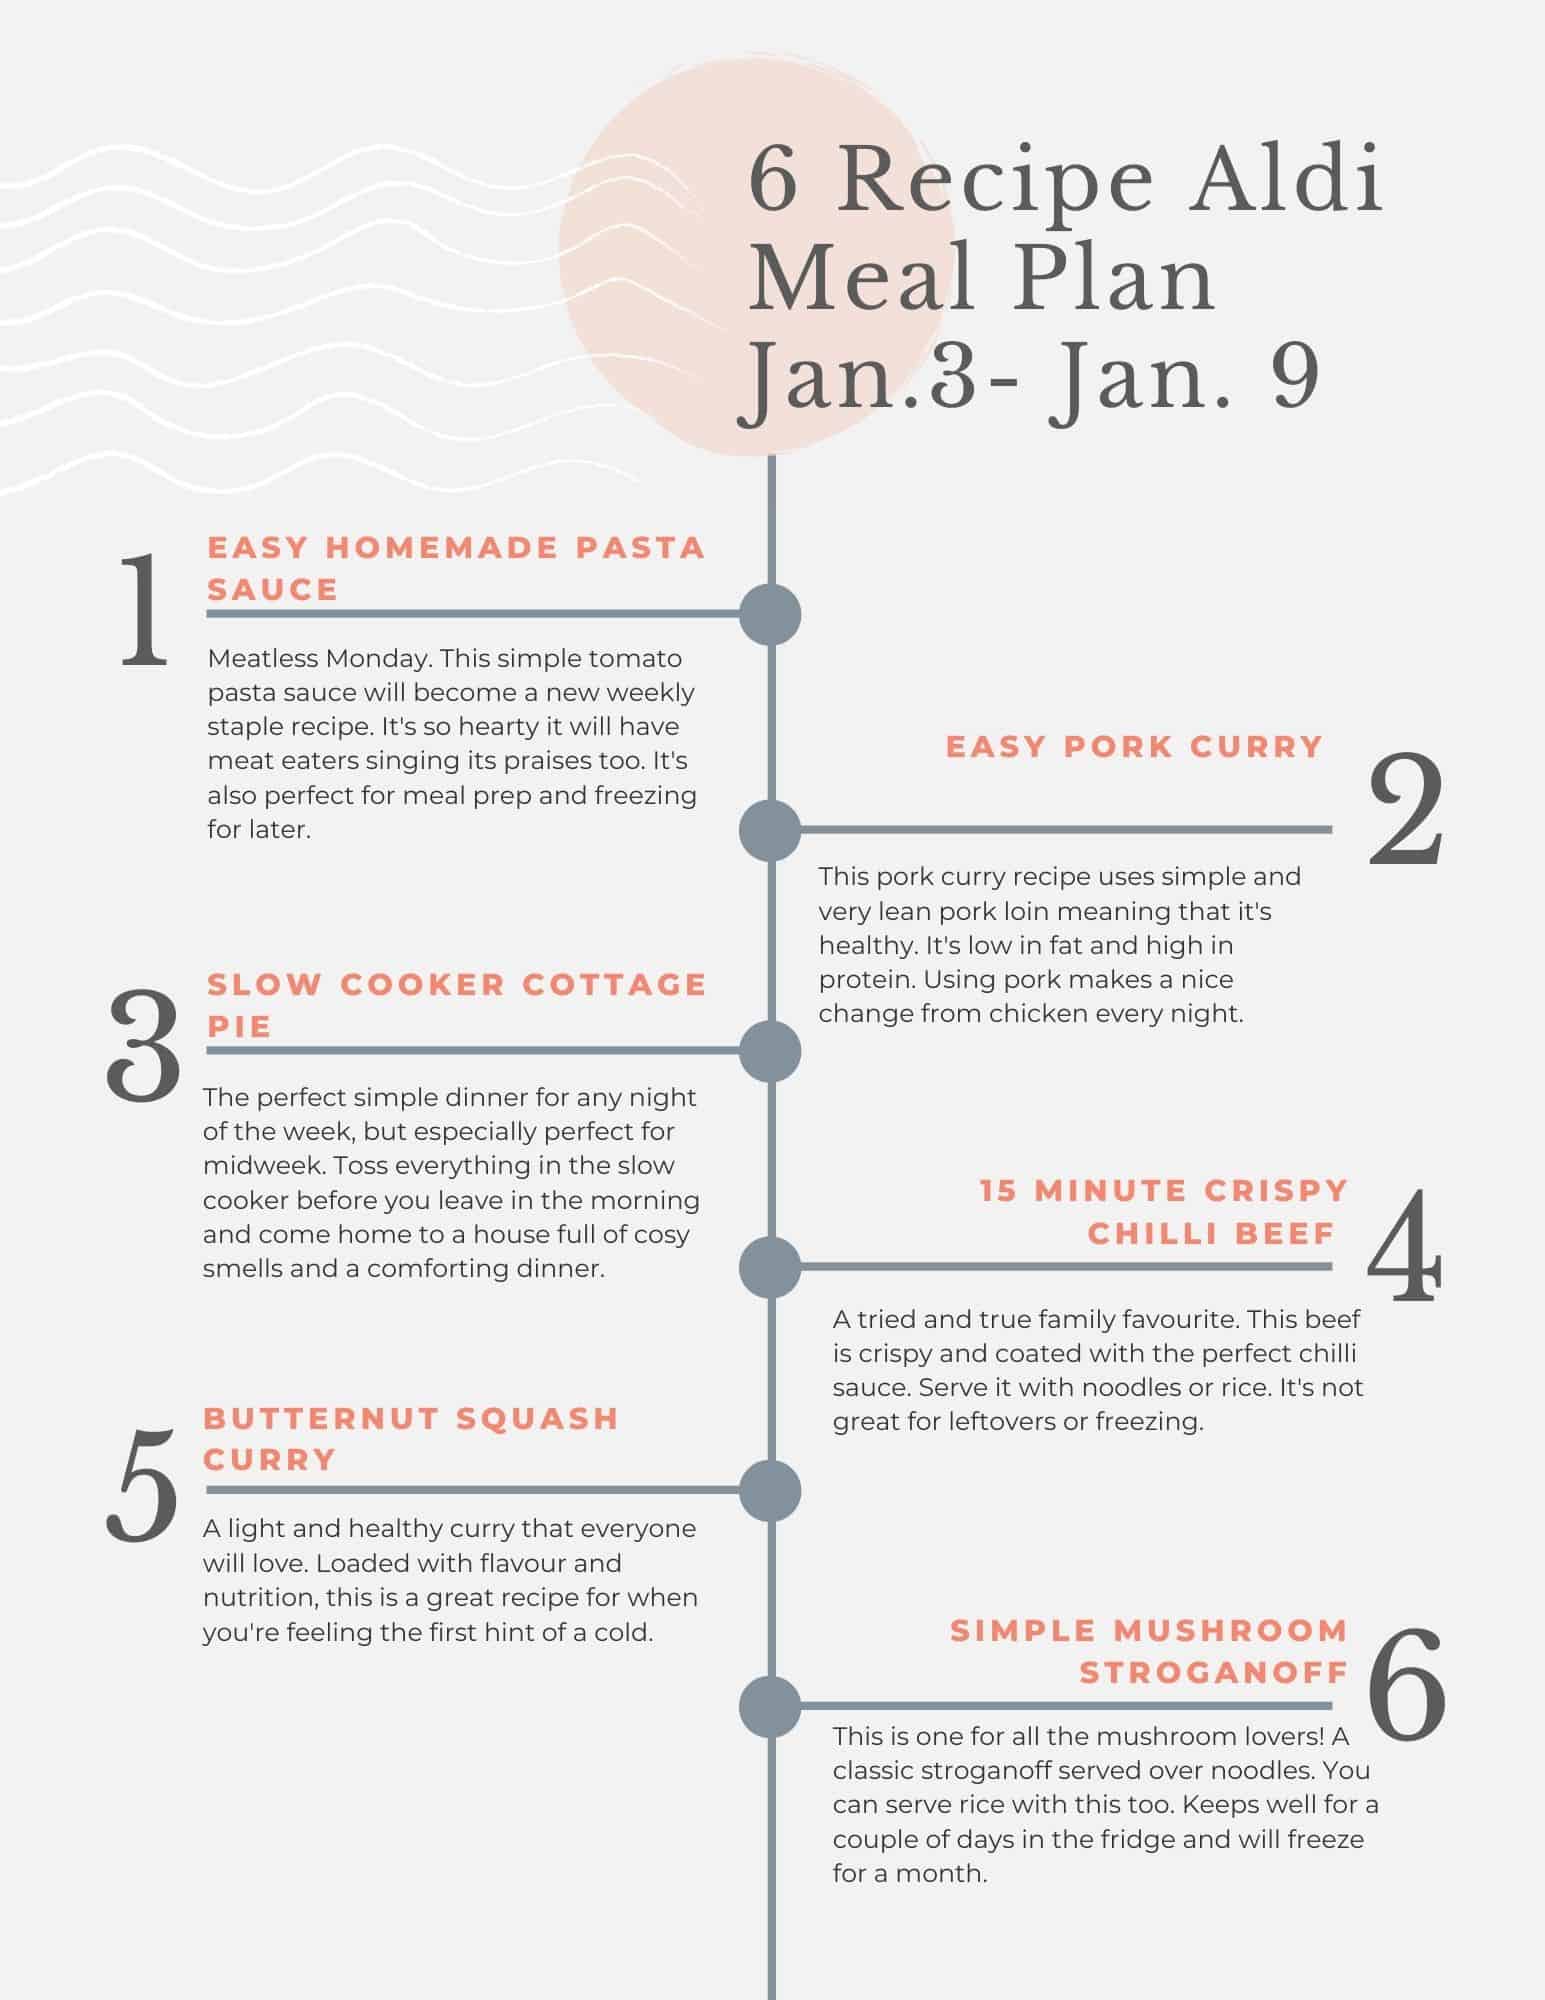 Aldi budget meal plan tip sheet.